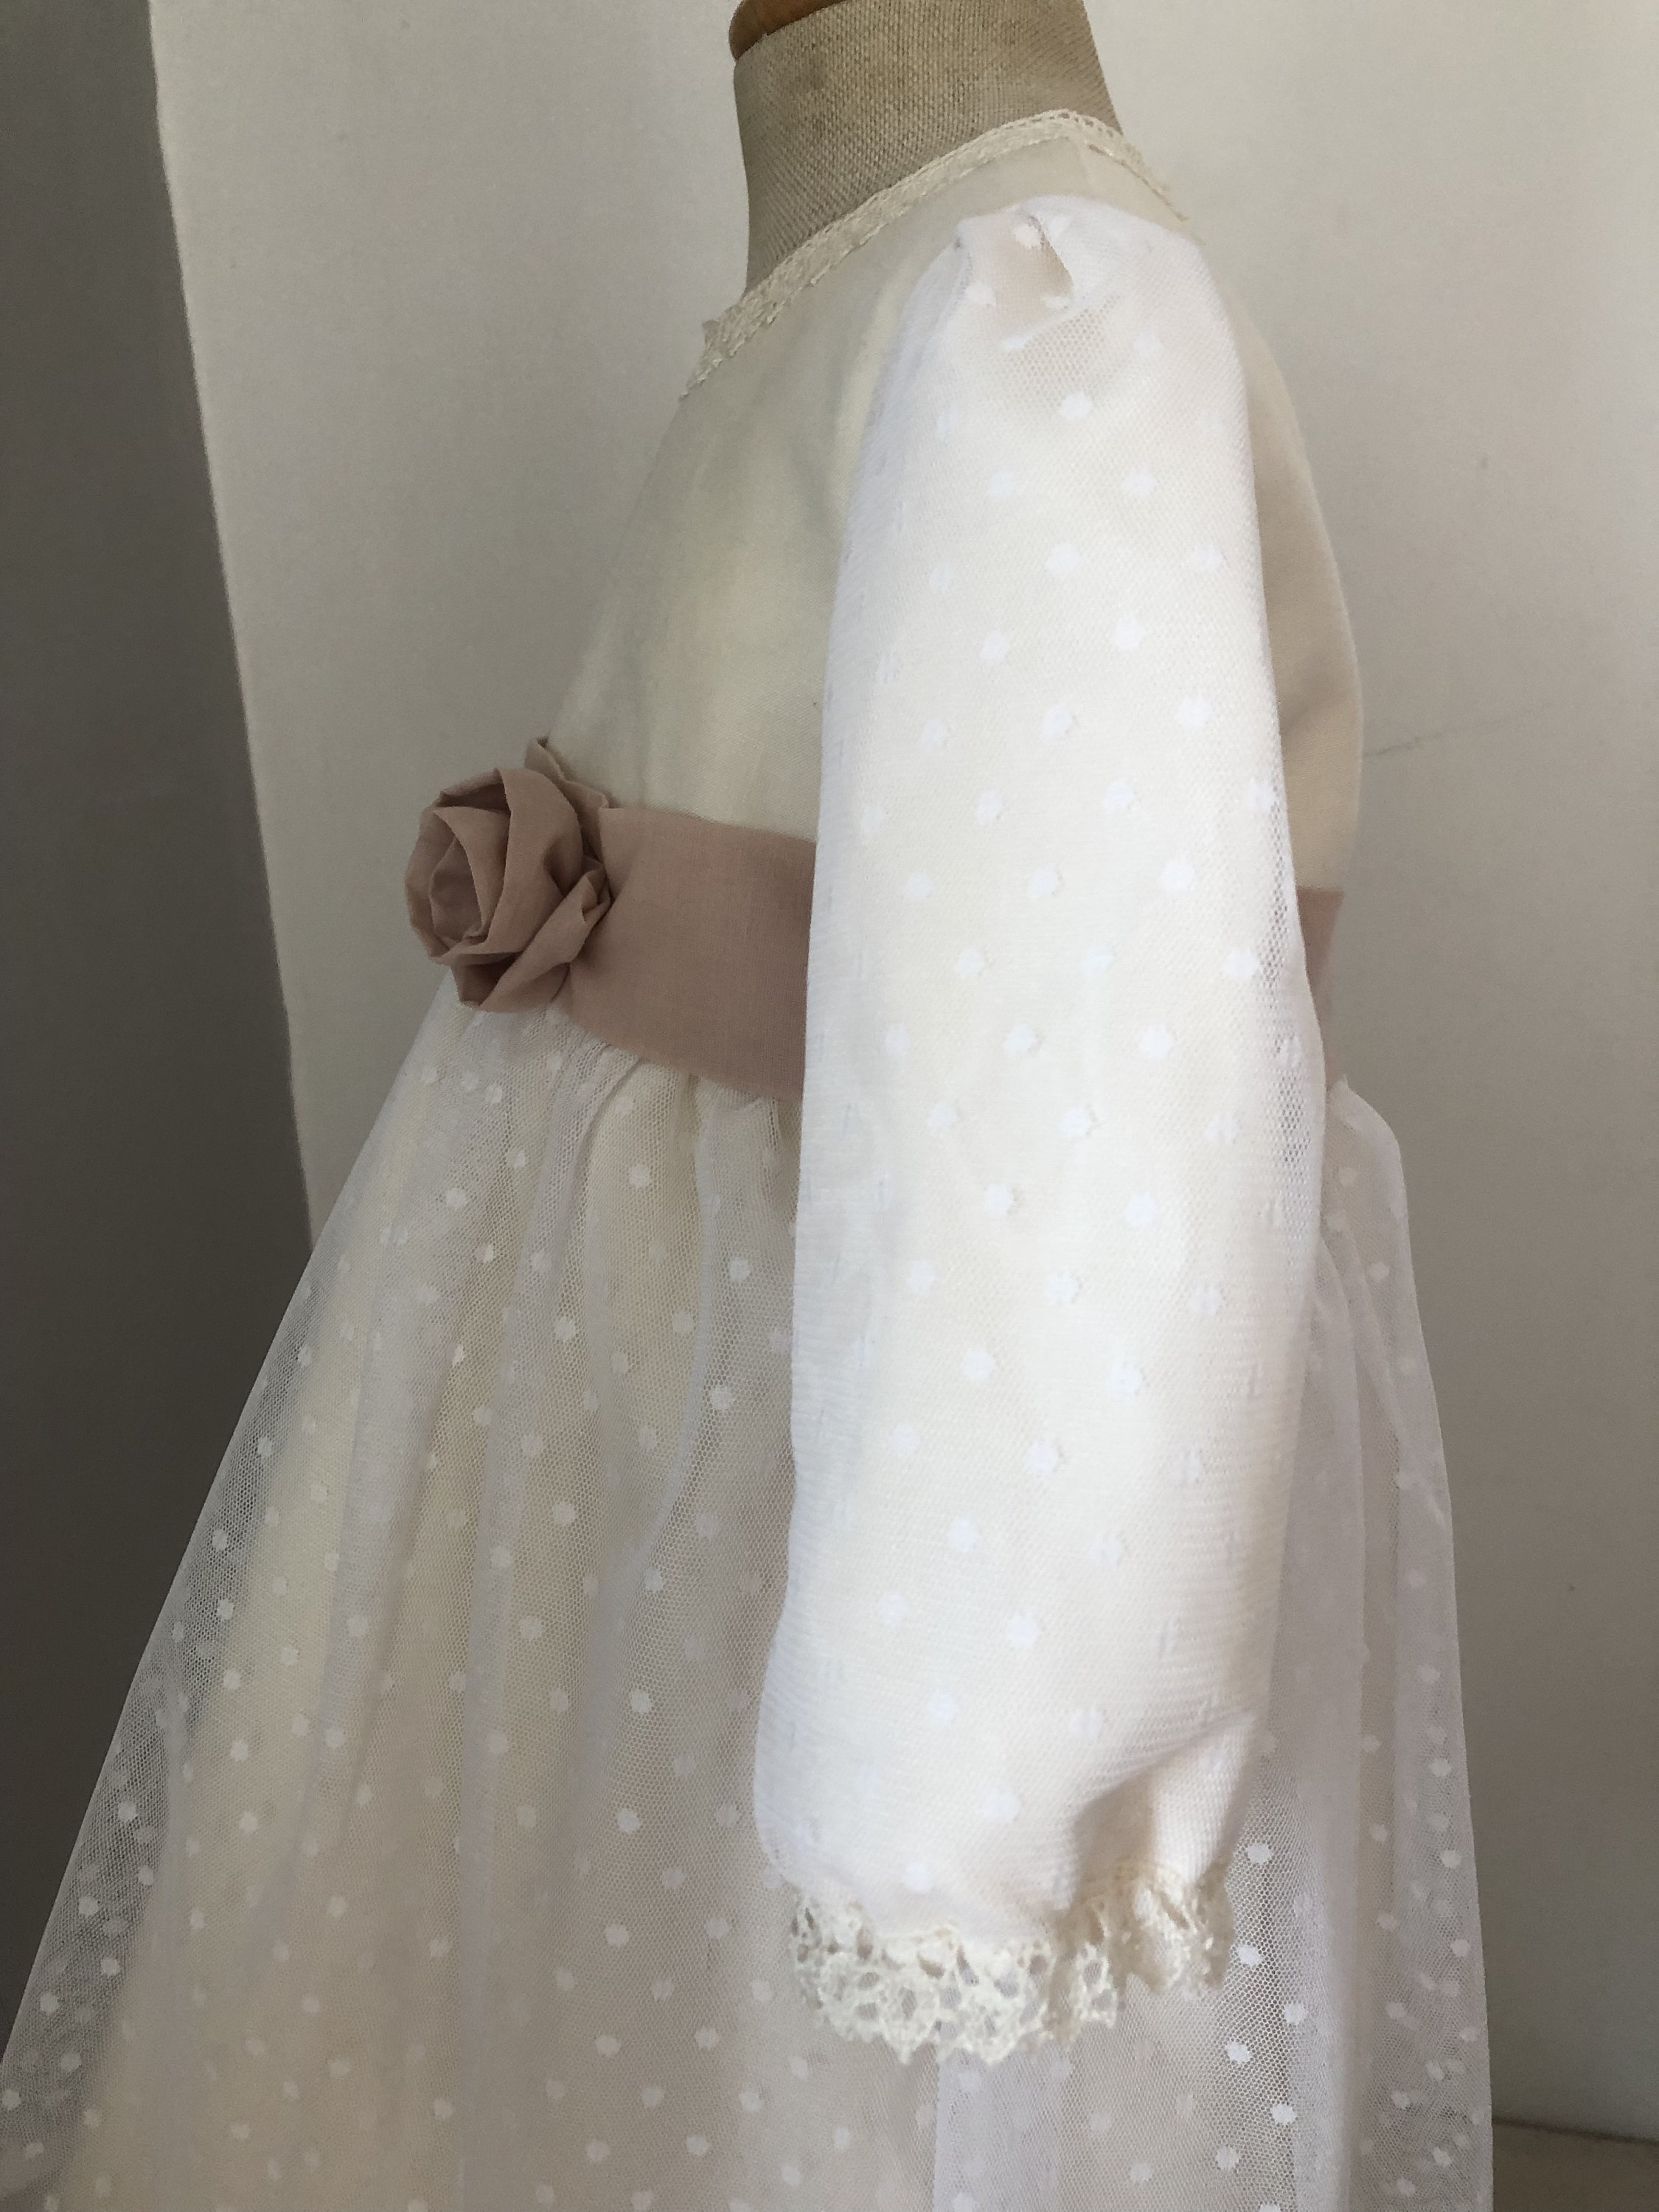 Girls Christening gown and bonnet - Handmade in UK - Lace Baptism dress |  eBay